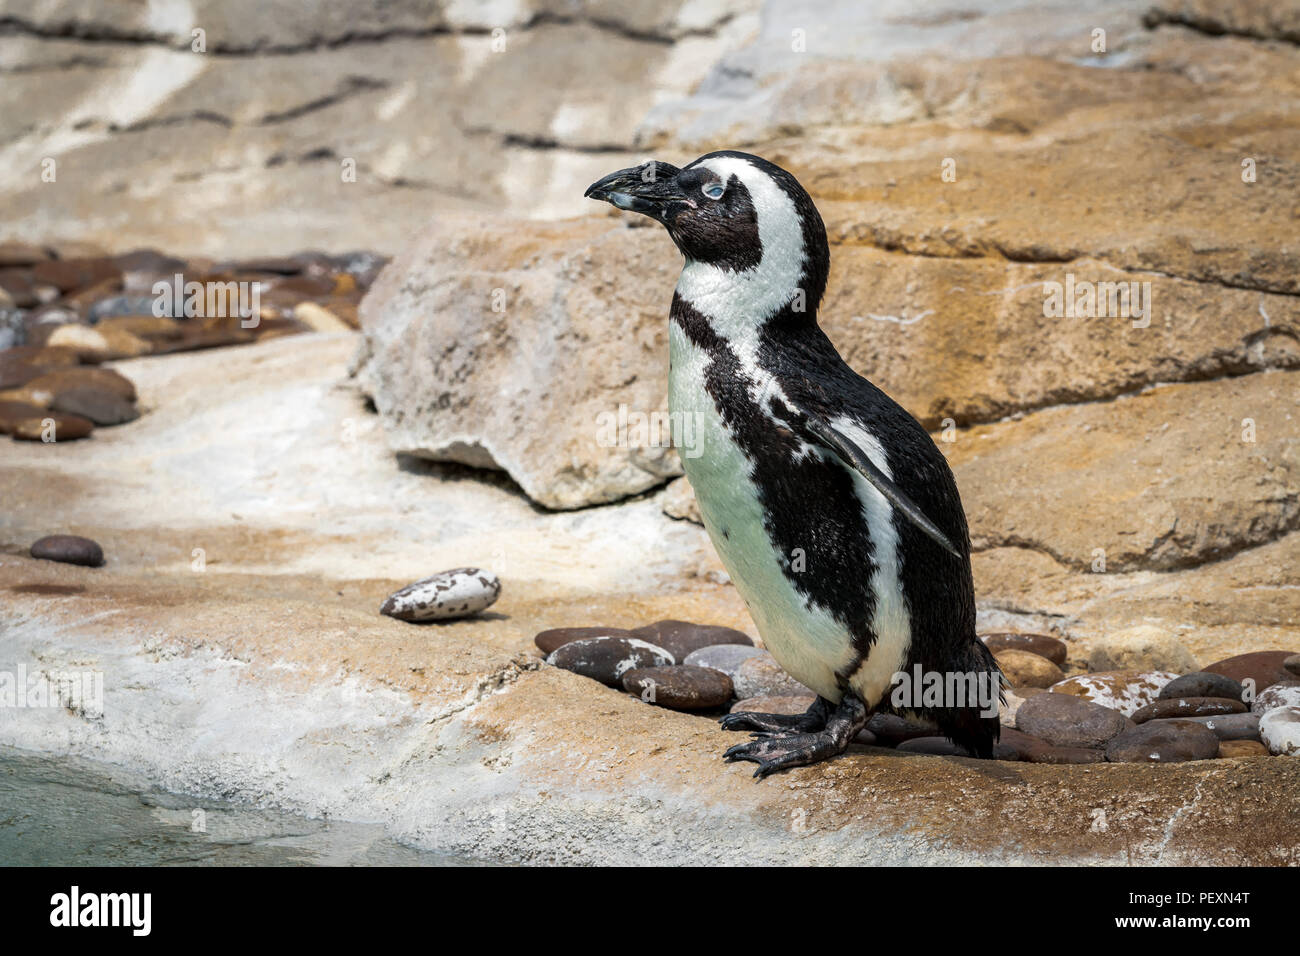 Tiny Humboldt Penguin standing on rocks of a zoo exhibit. Stock Photo